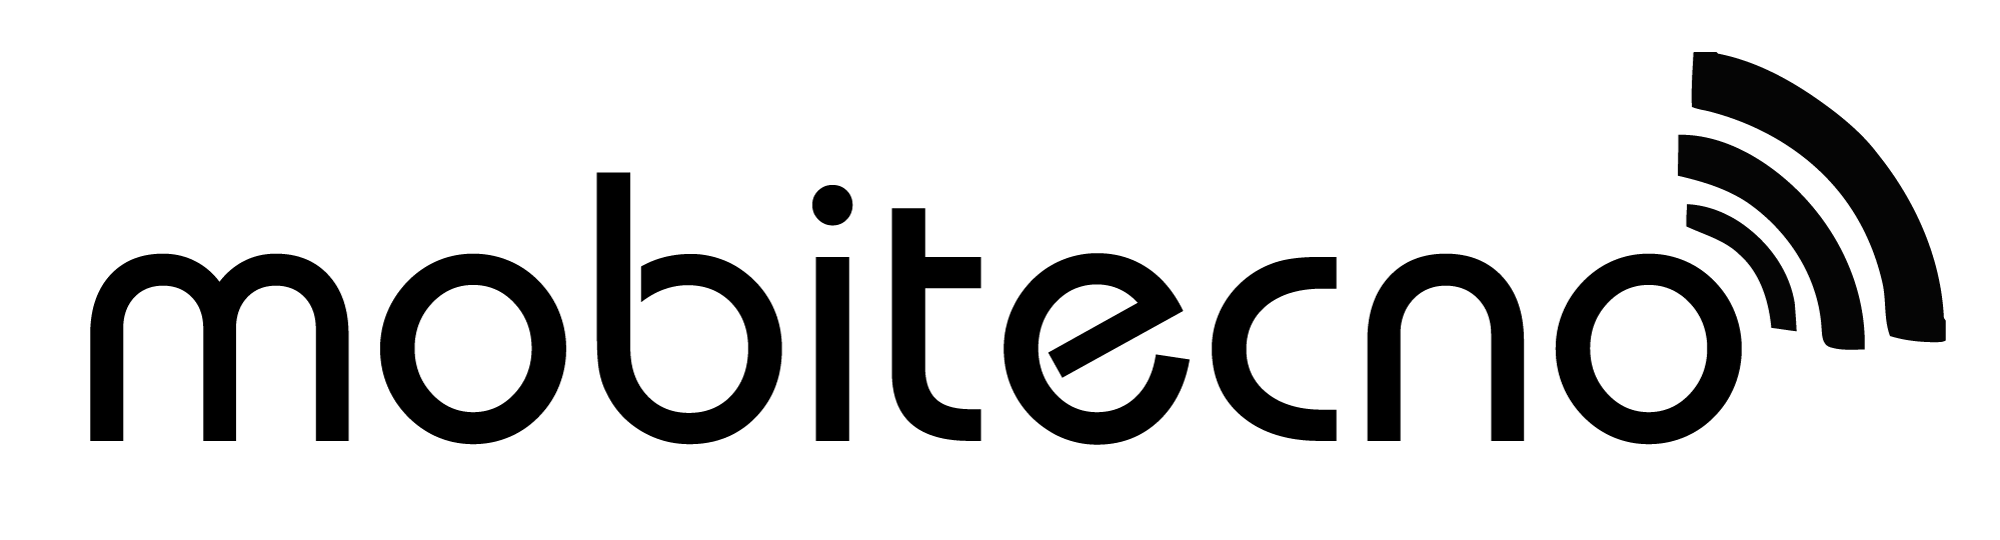 Mobitecno - tech - tutoriais - news